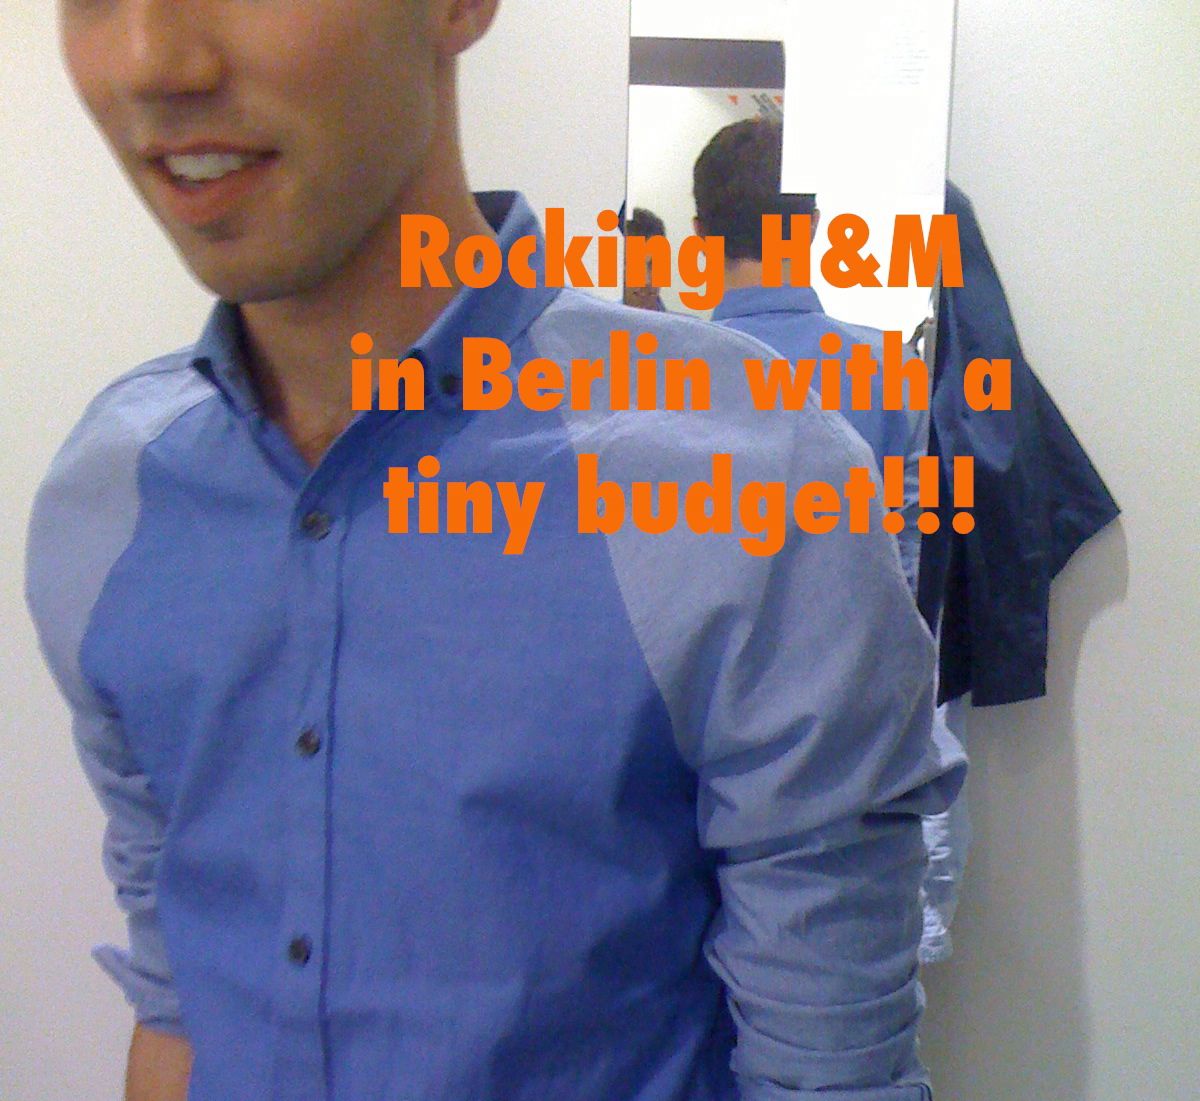 <!--:en-->Trend  shopping for men in Berlin at H&M<!--:-->